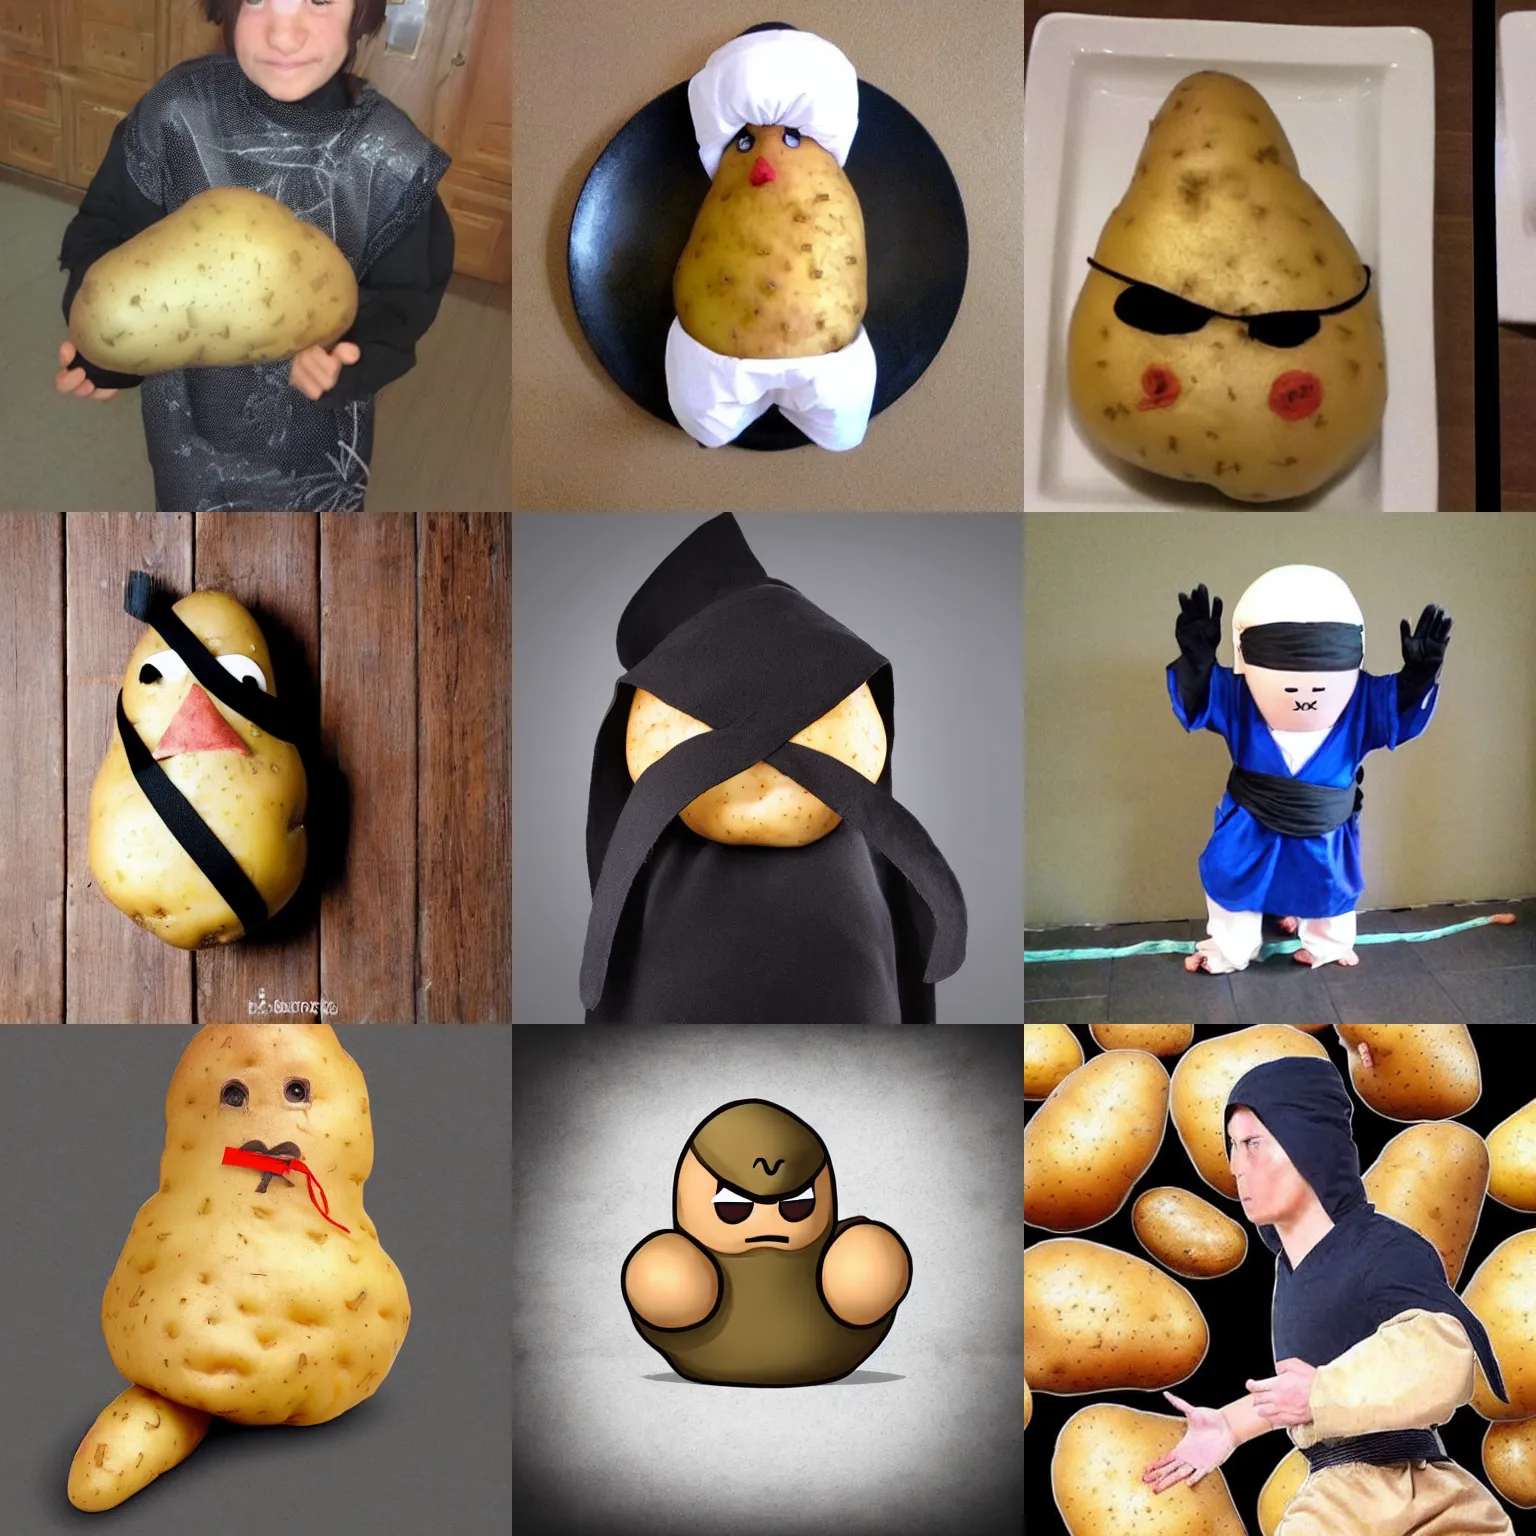 Prompt: a potato dressed as a ninja